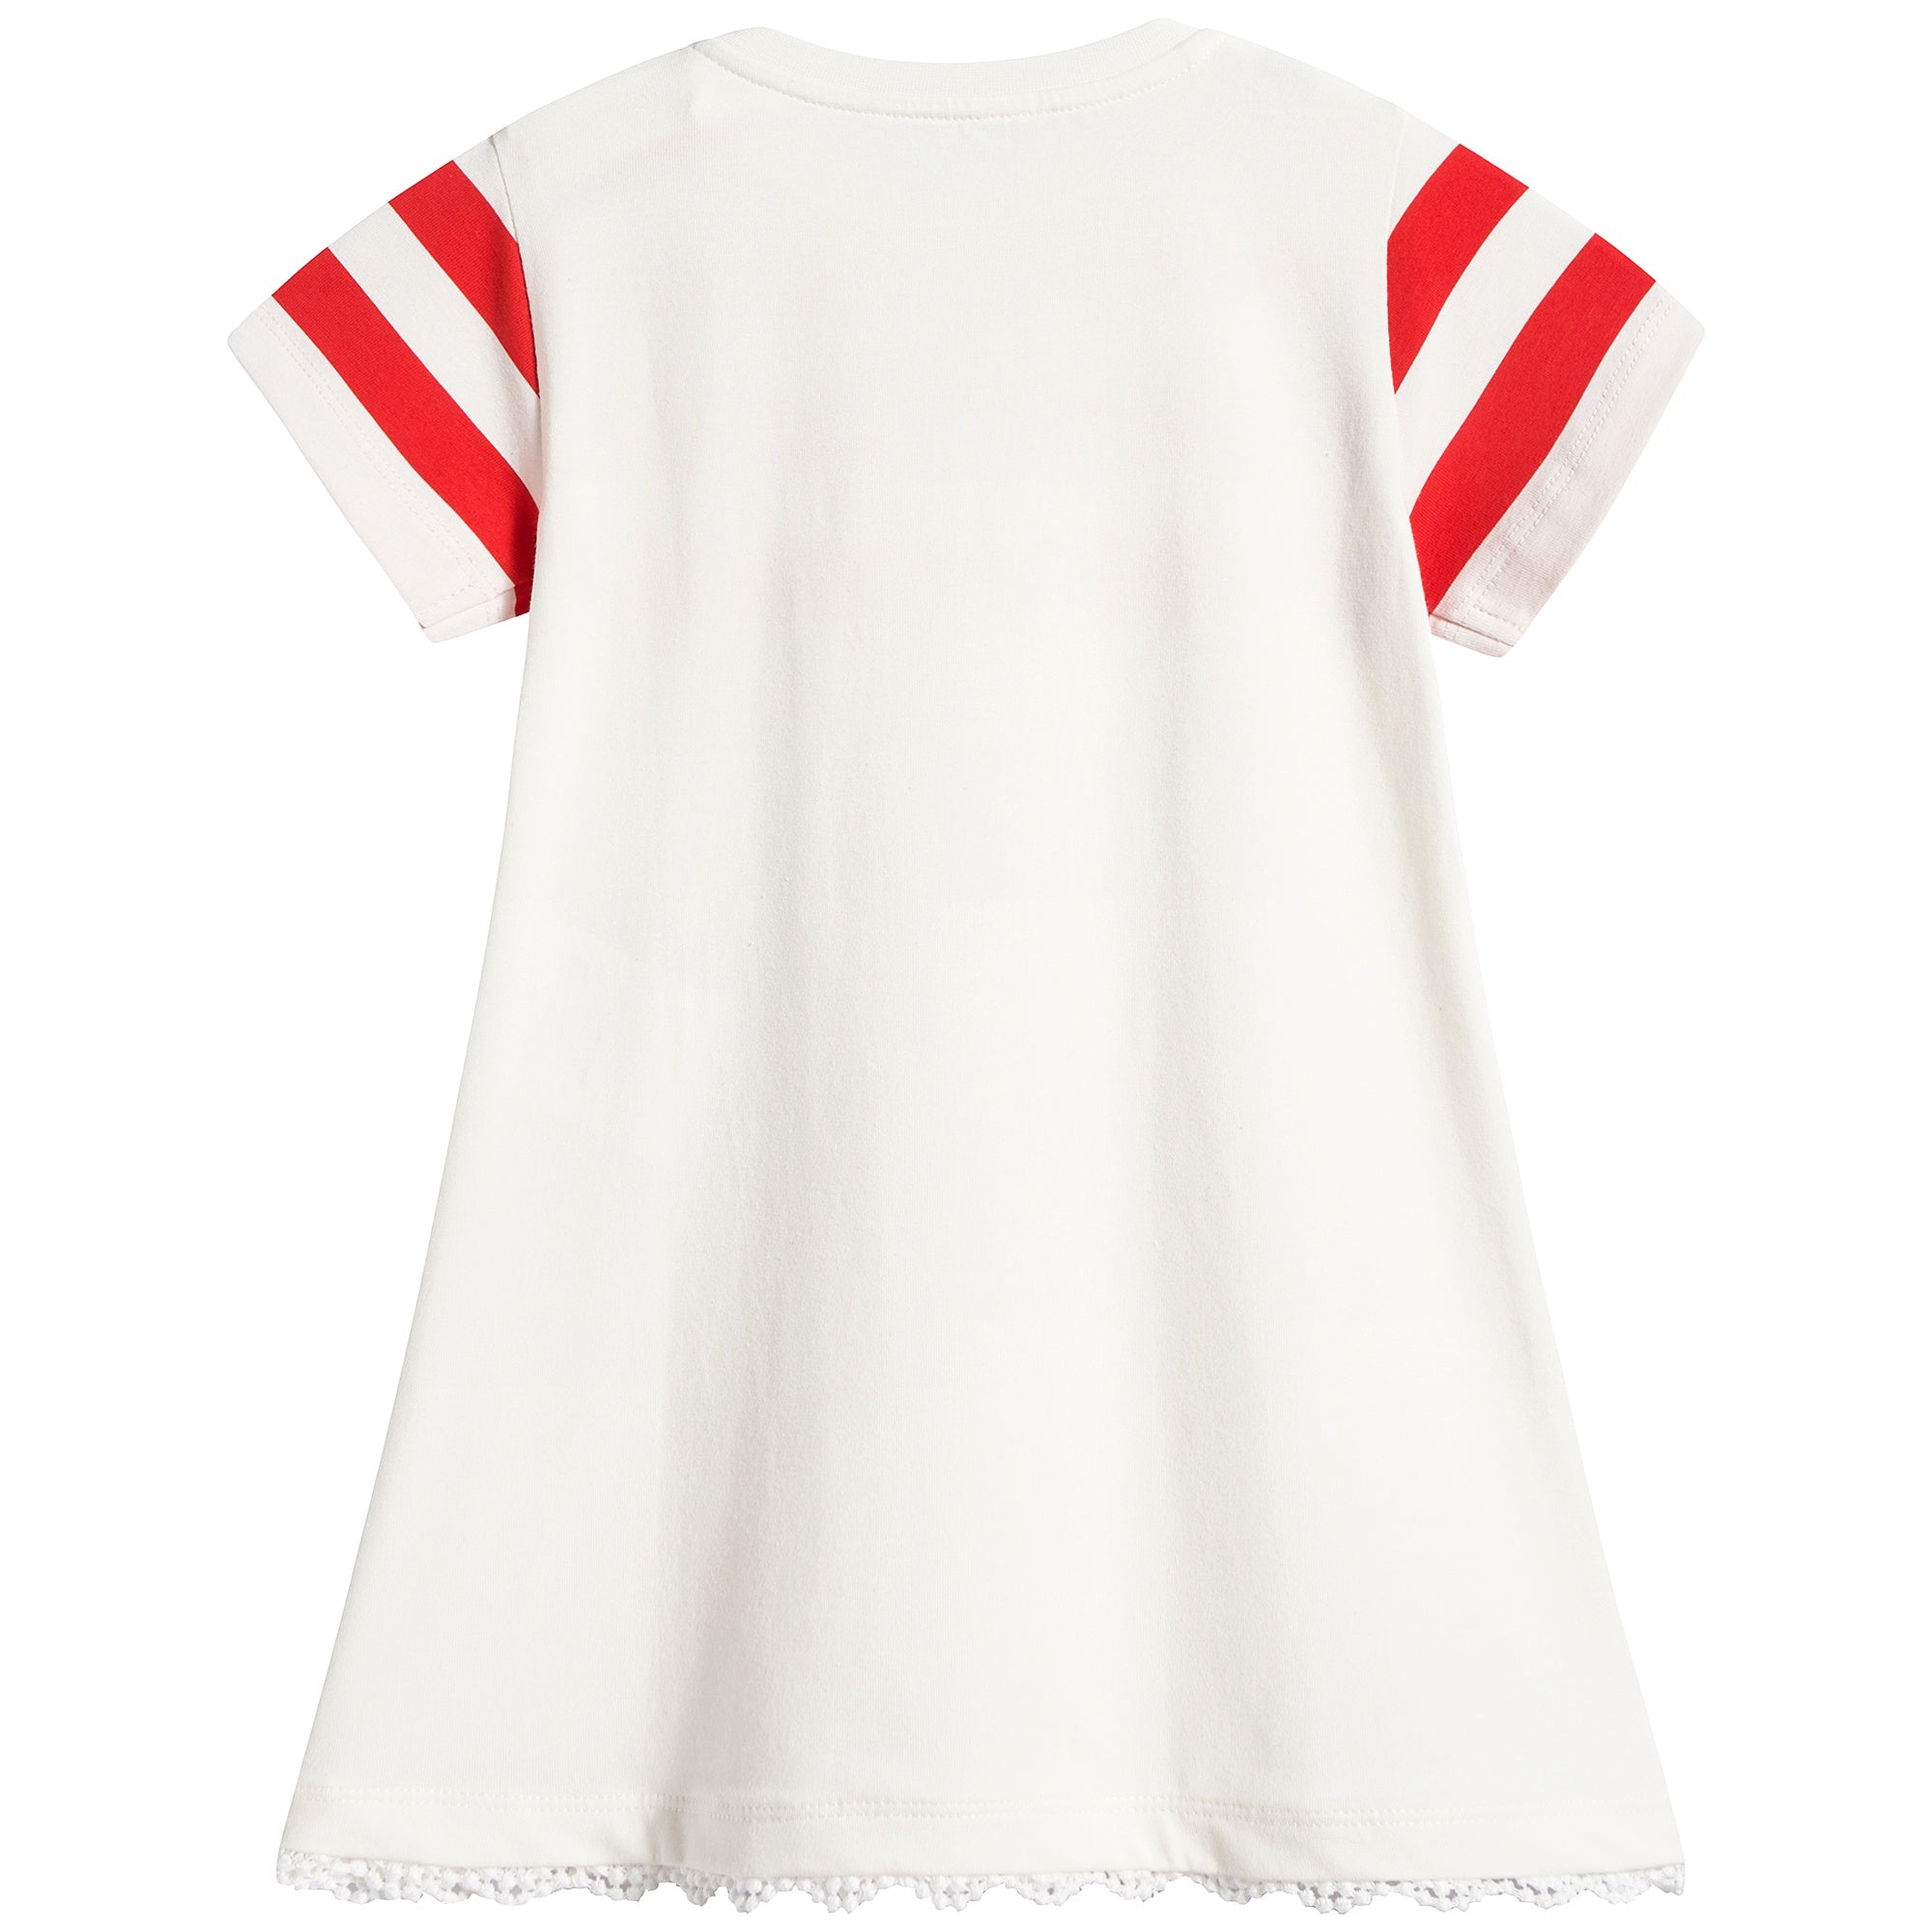 Baby Girls White & Red Stripes T-shirt